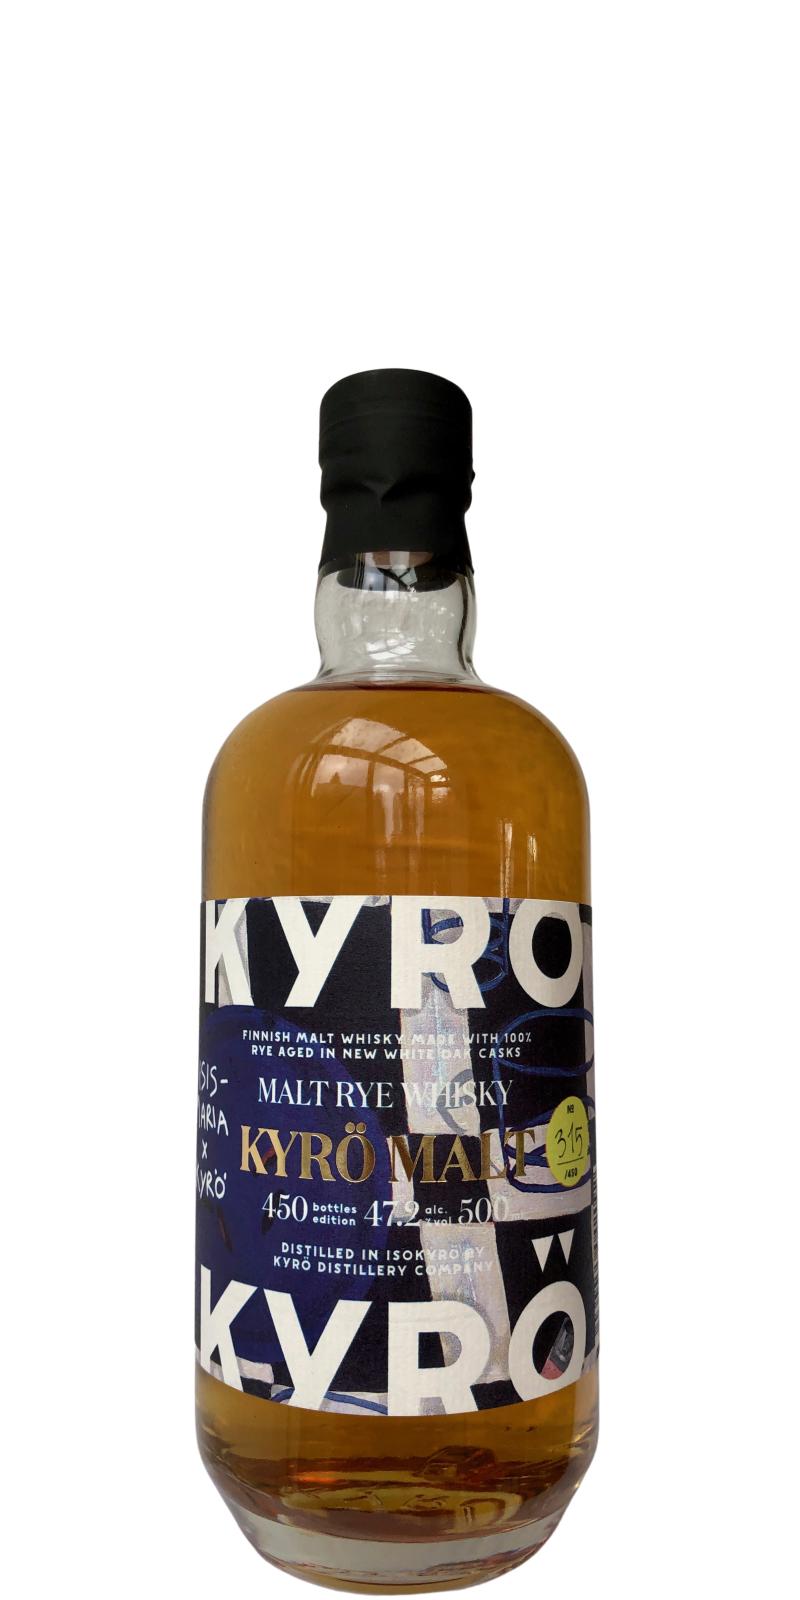 Kyro Isis-Maria x Kyro Malt Rye Whisky American White Oak 47.2% 500ml